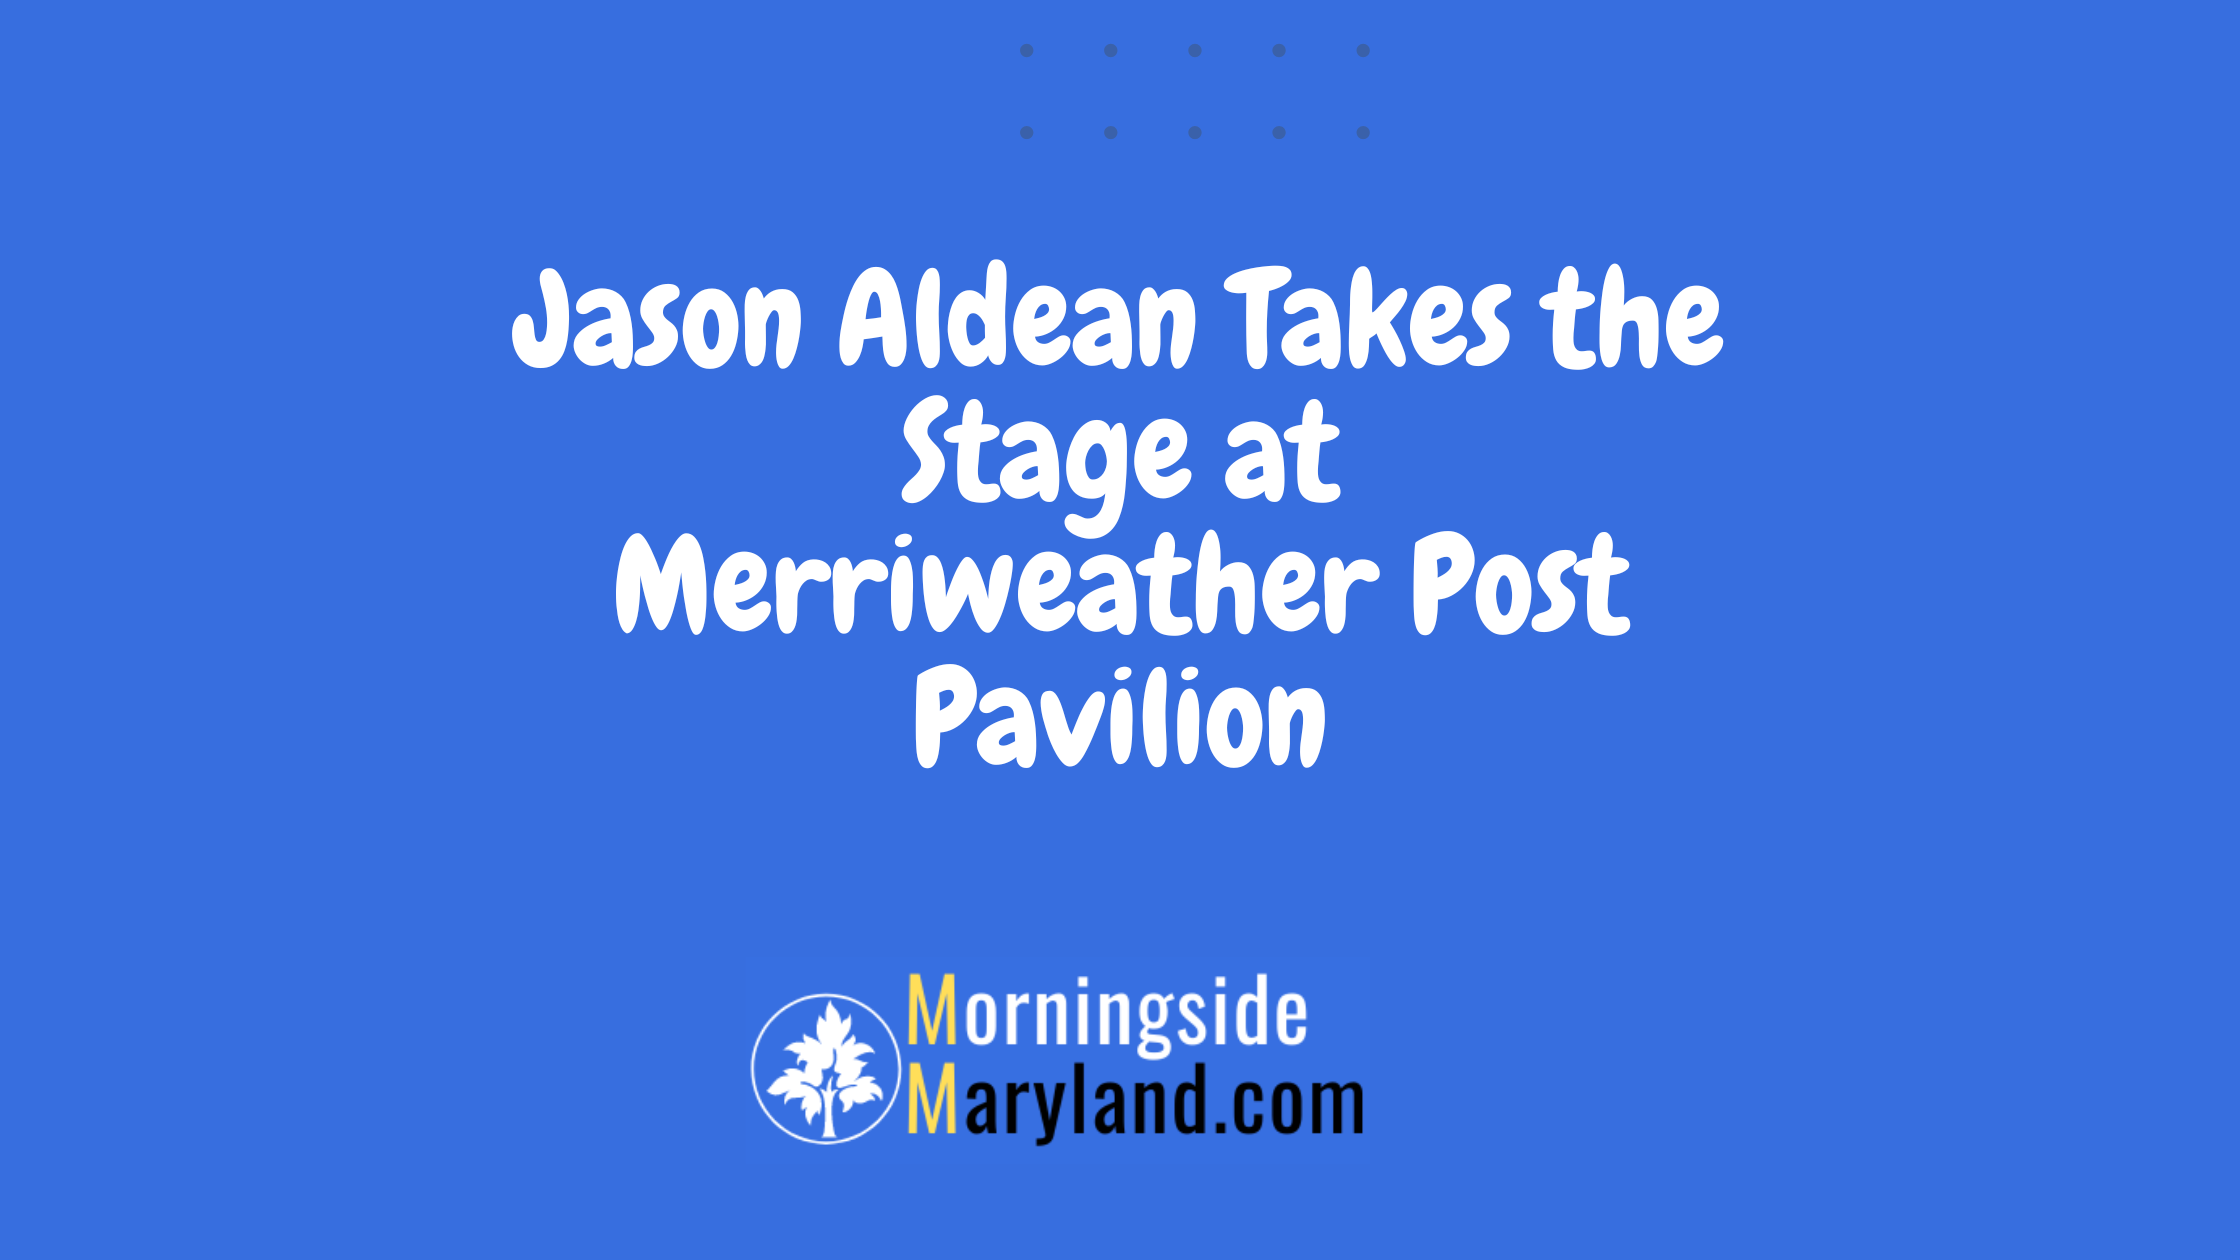 Jason Aldean Takes the Stage at Merriweather Post Pavilion